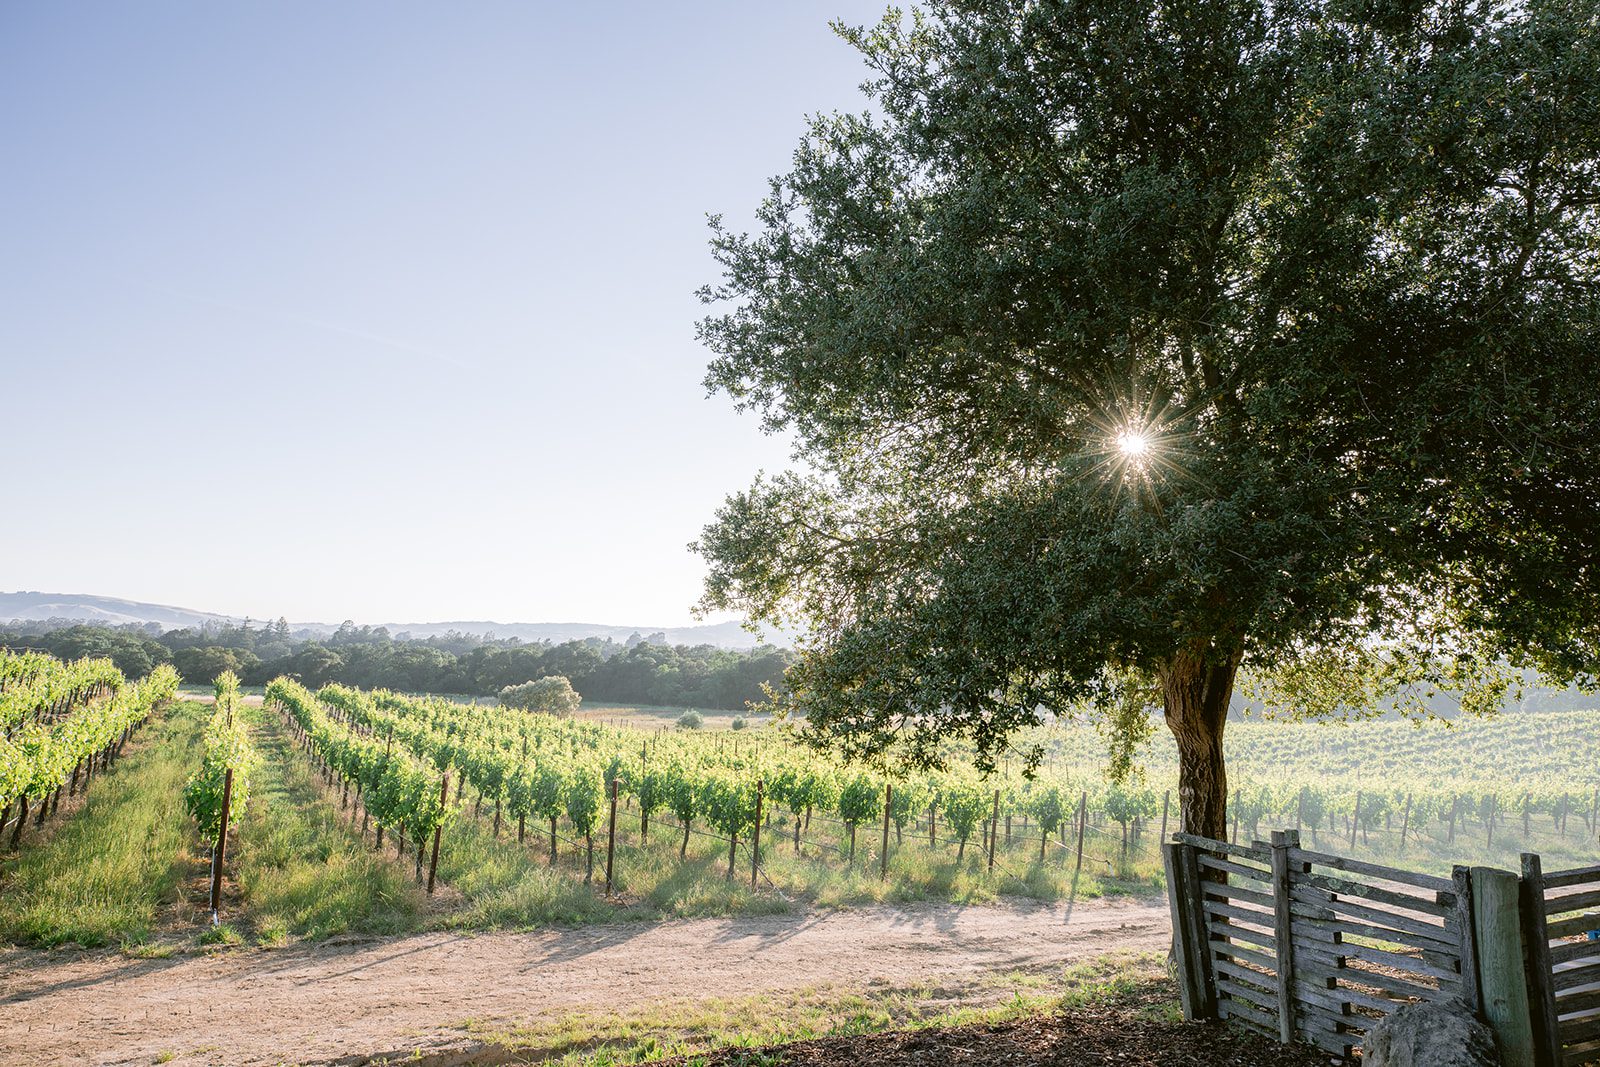 The sun is shining on a vineyard field.